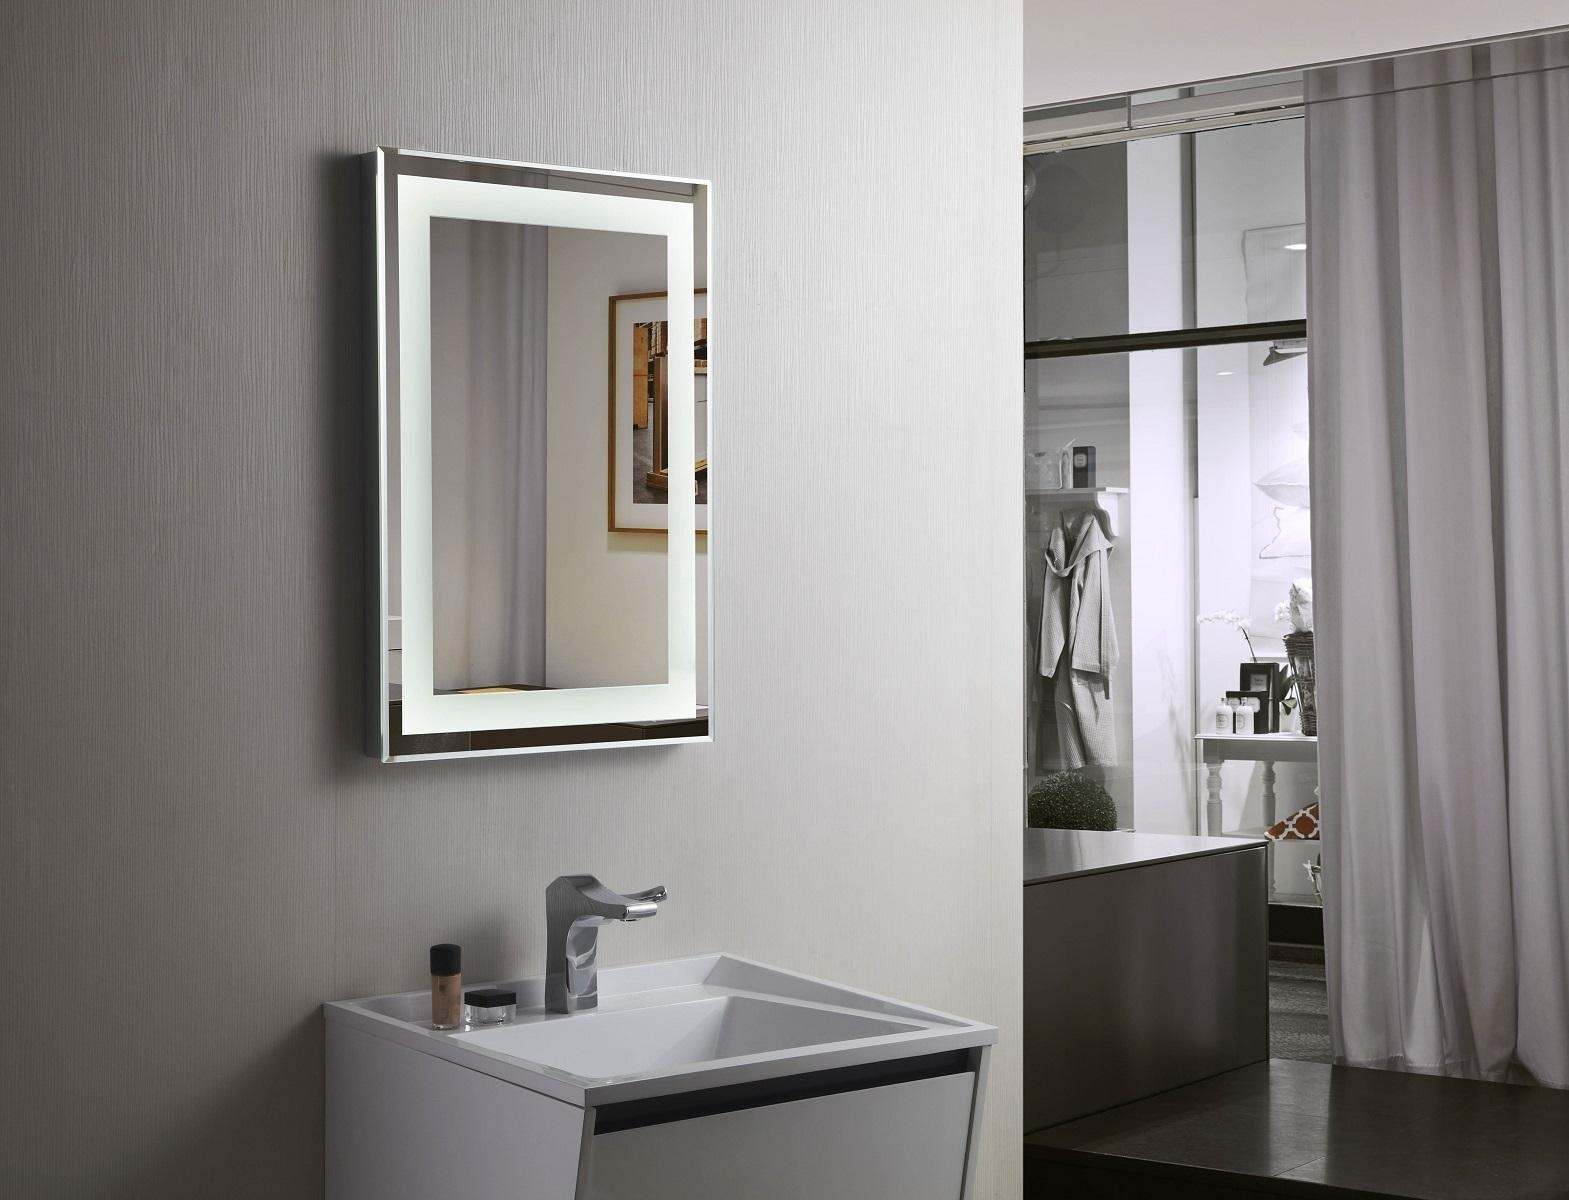 Bathroom Vanity Mirror With Lights
 20 Bathroom Lighted Vanity Mirrors